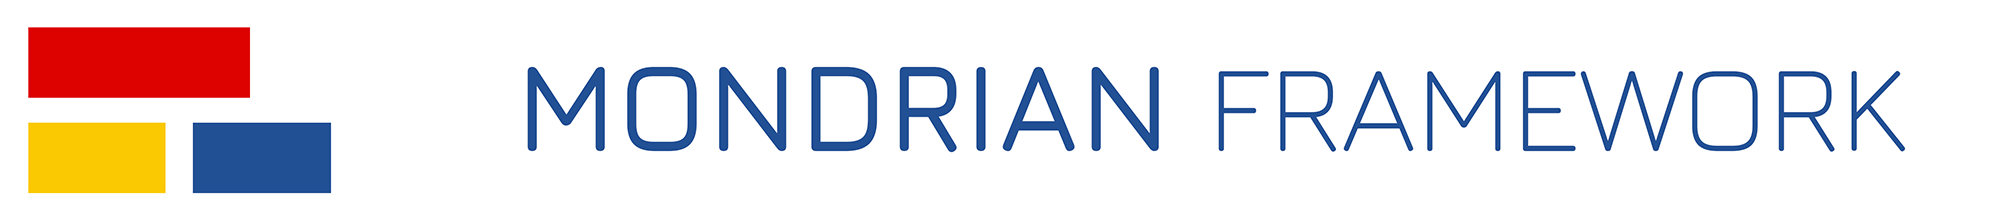 Mondrian Framework Logo